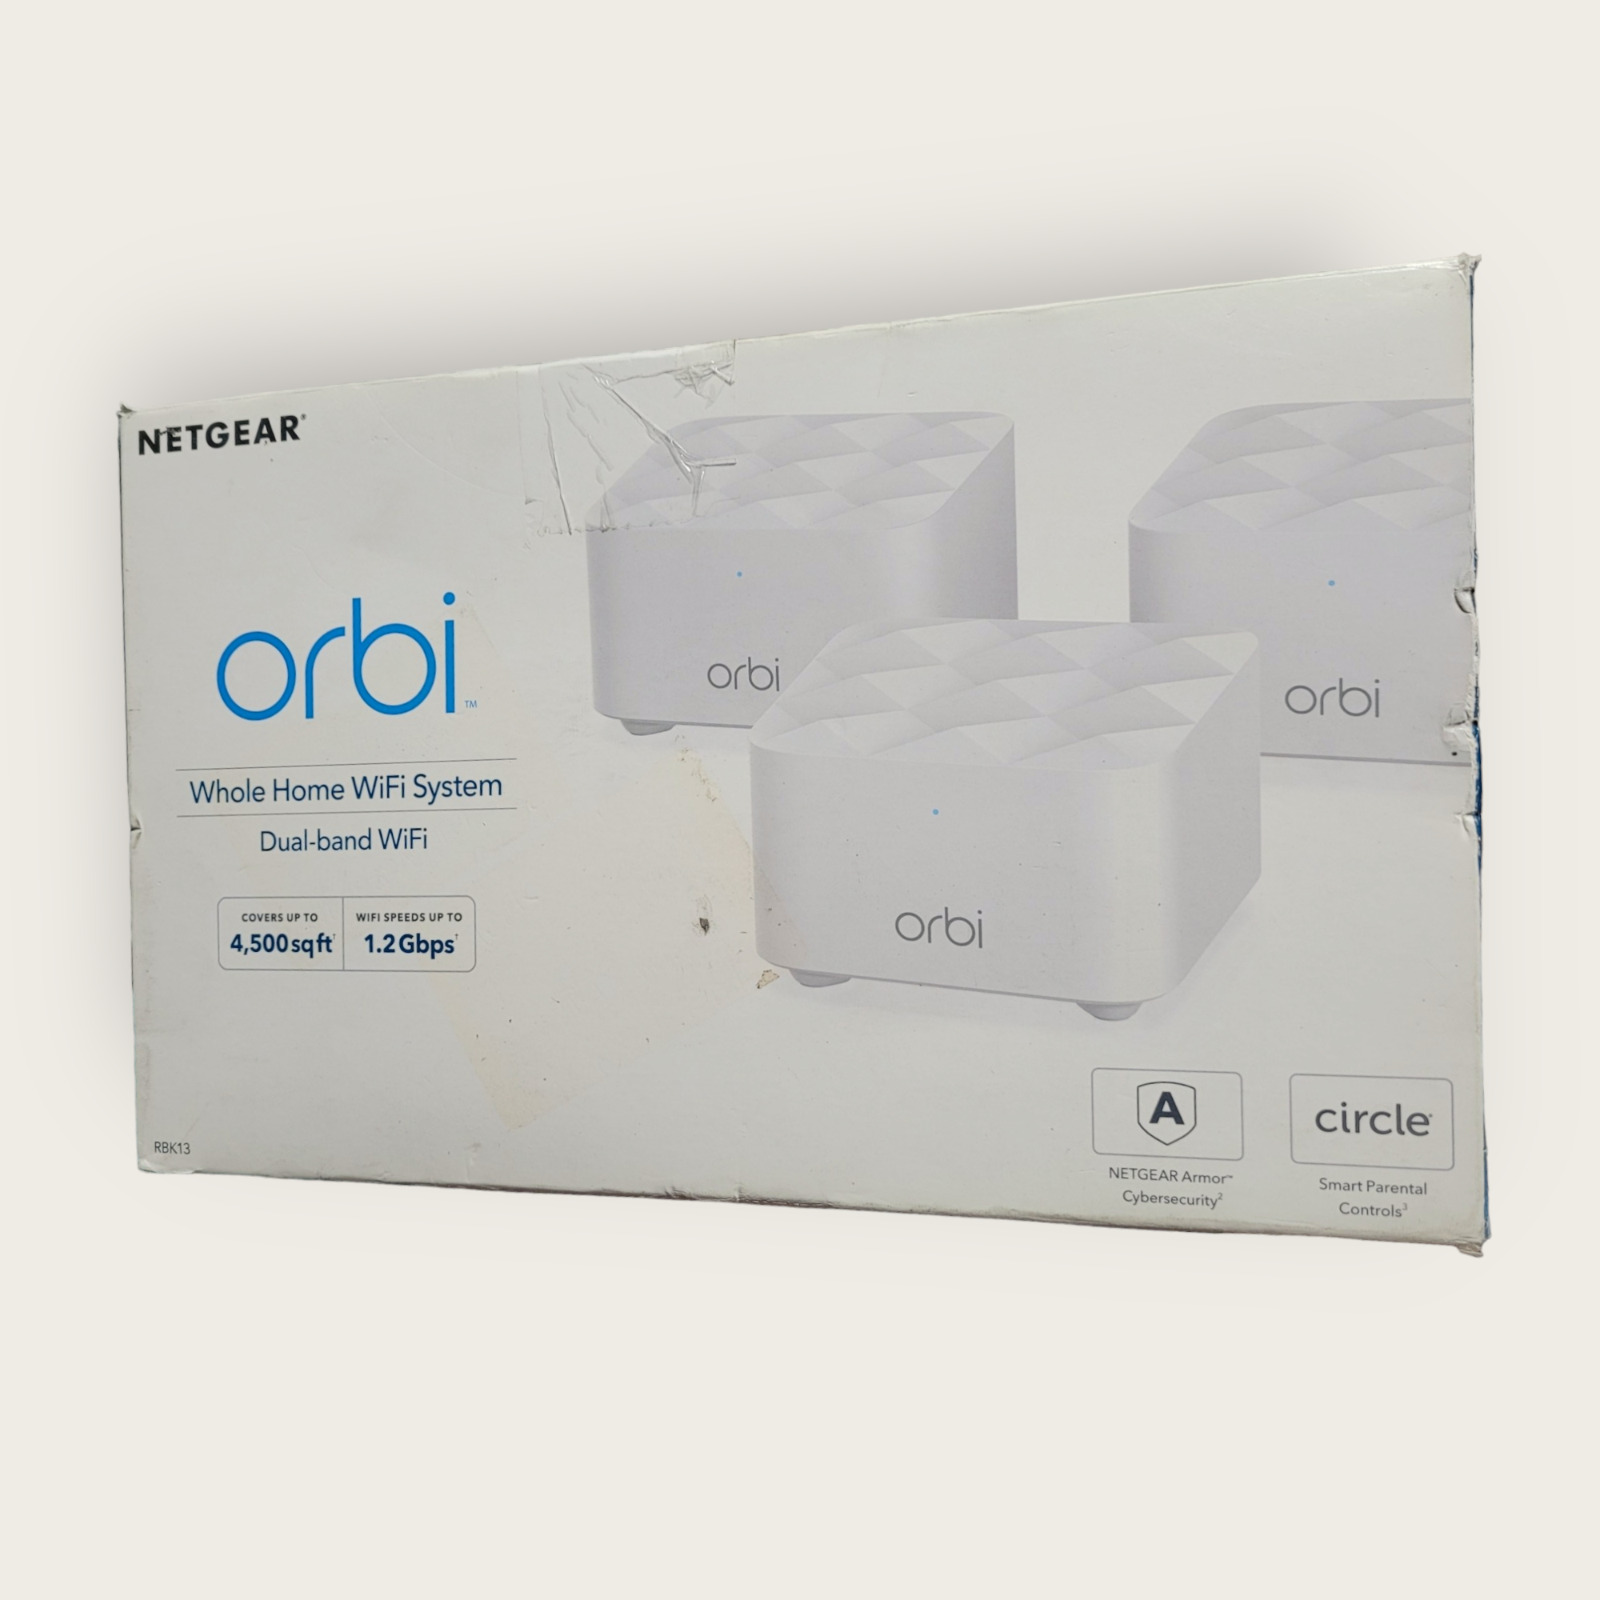 Netgear Orbi AC1200 Dual-Band Whole Home Mesh WiFi System RBK13 (3 Pack)